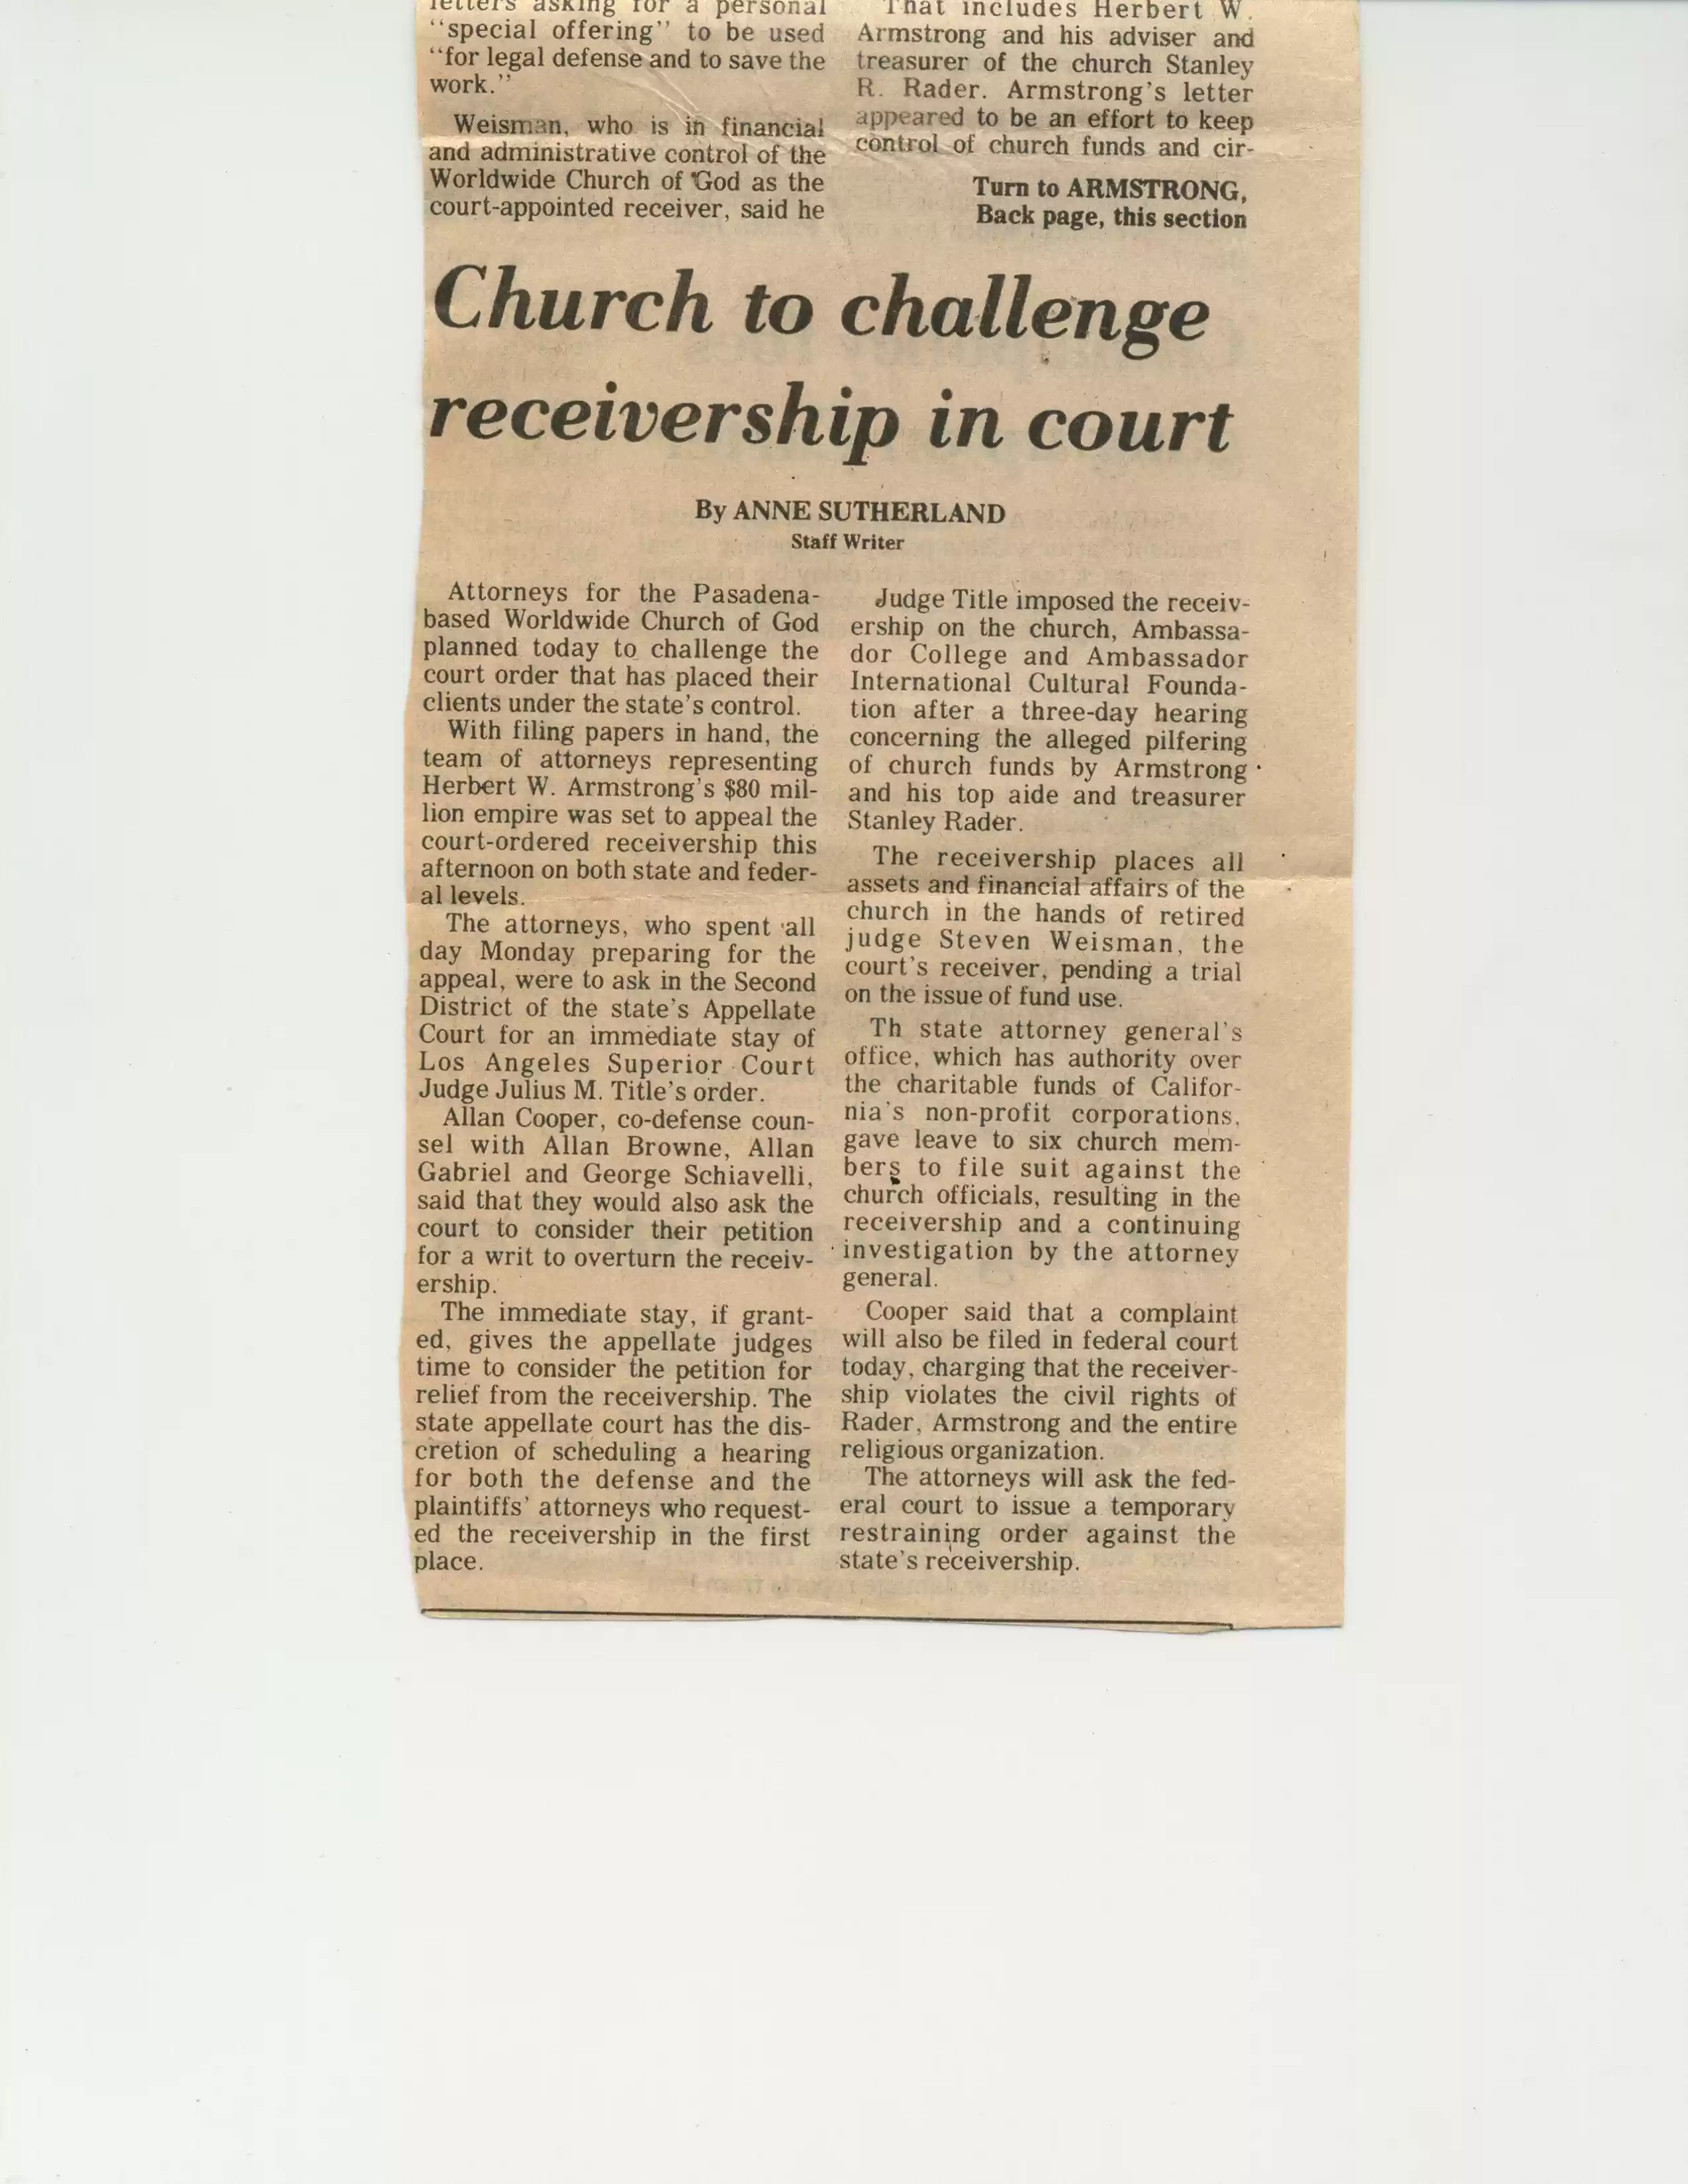 2. Pasadena Star News 1-16-79